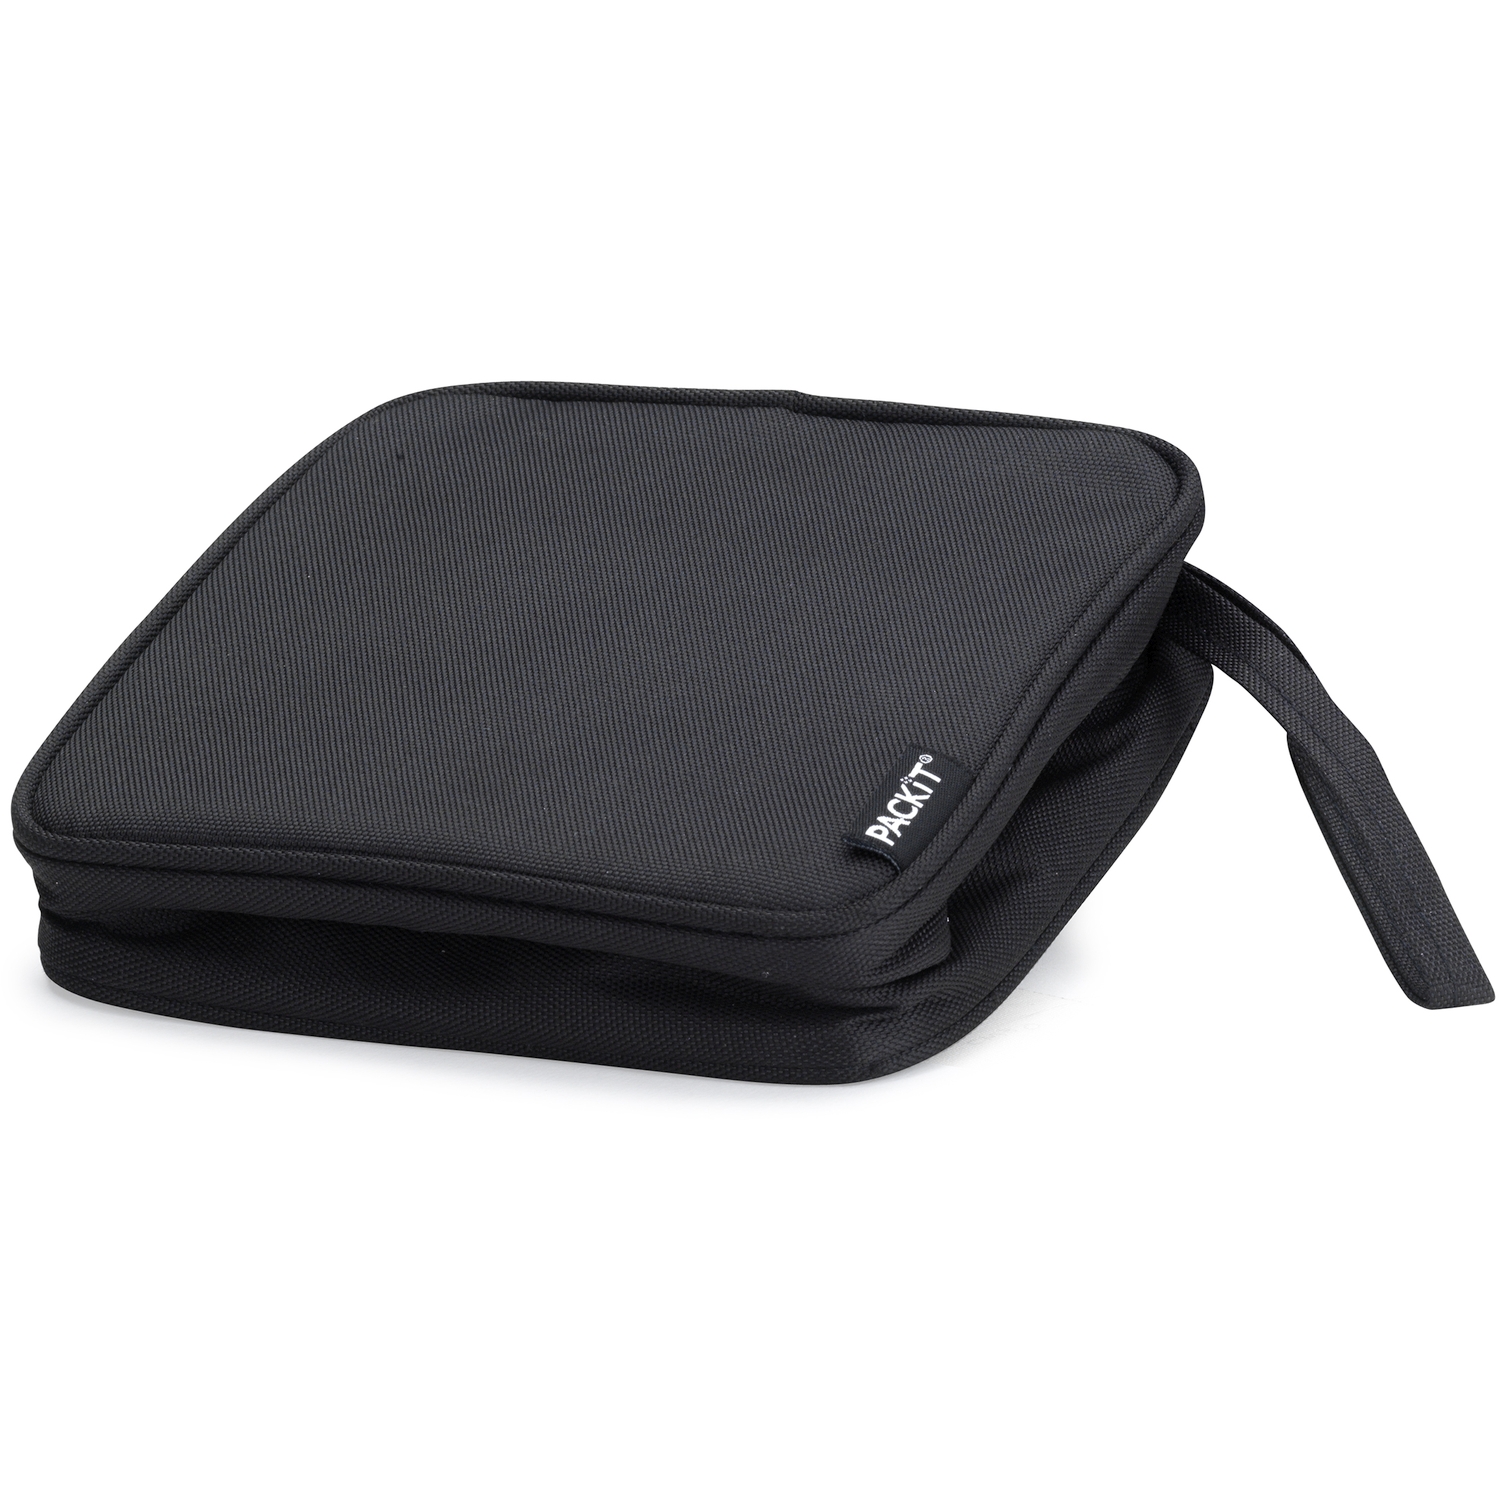     Sandwich bag Black, 1.0  (PACKiT PACKIT0012)